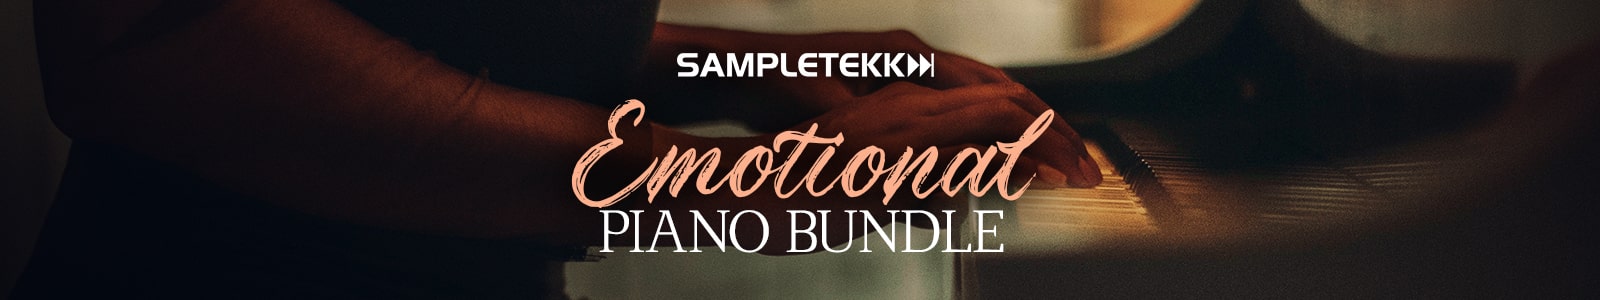 sampletekk emotional piano bundle